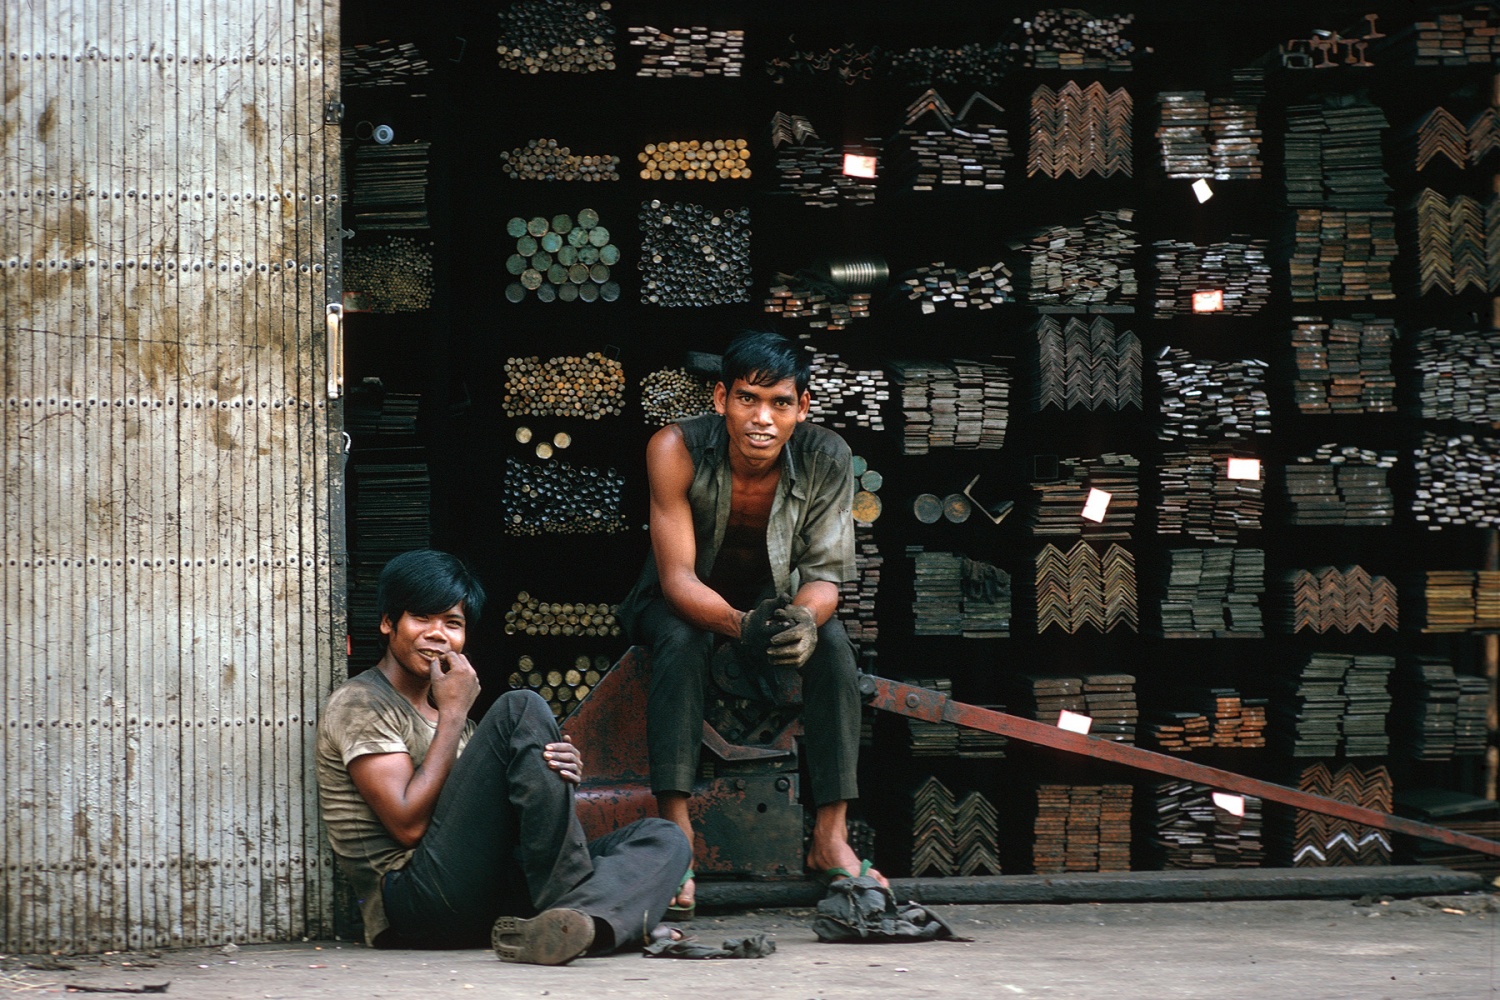 bill-hocker-steel-workers-bankok-thailand-1974